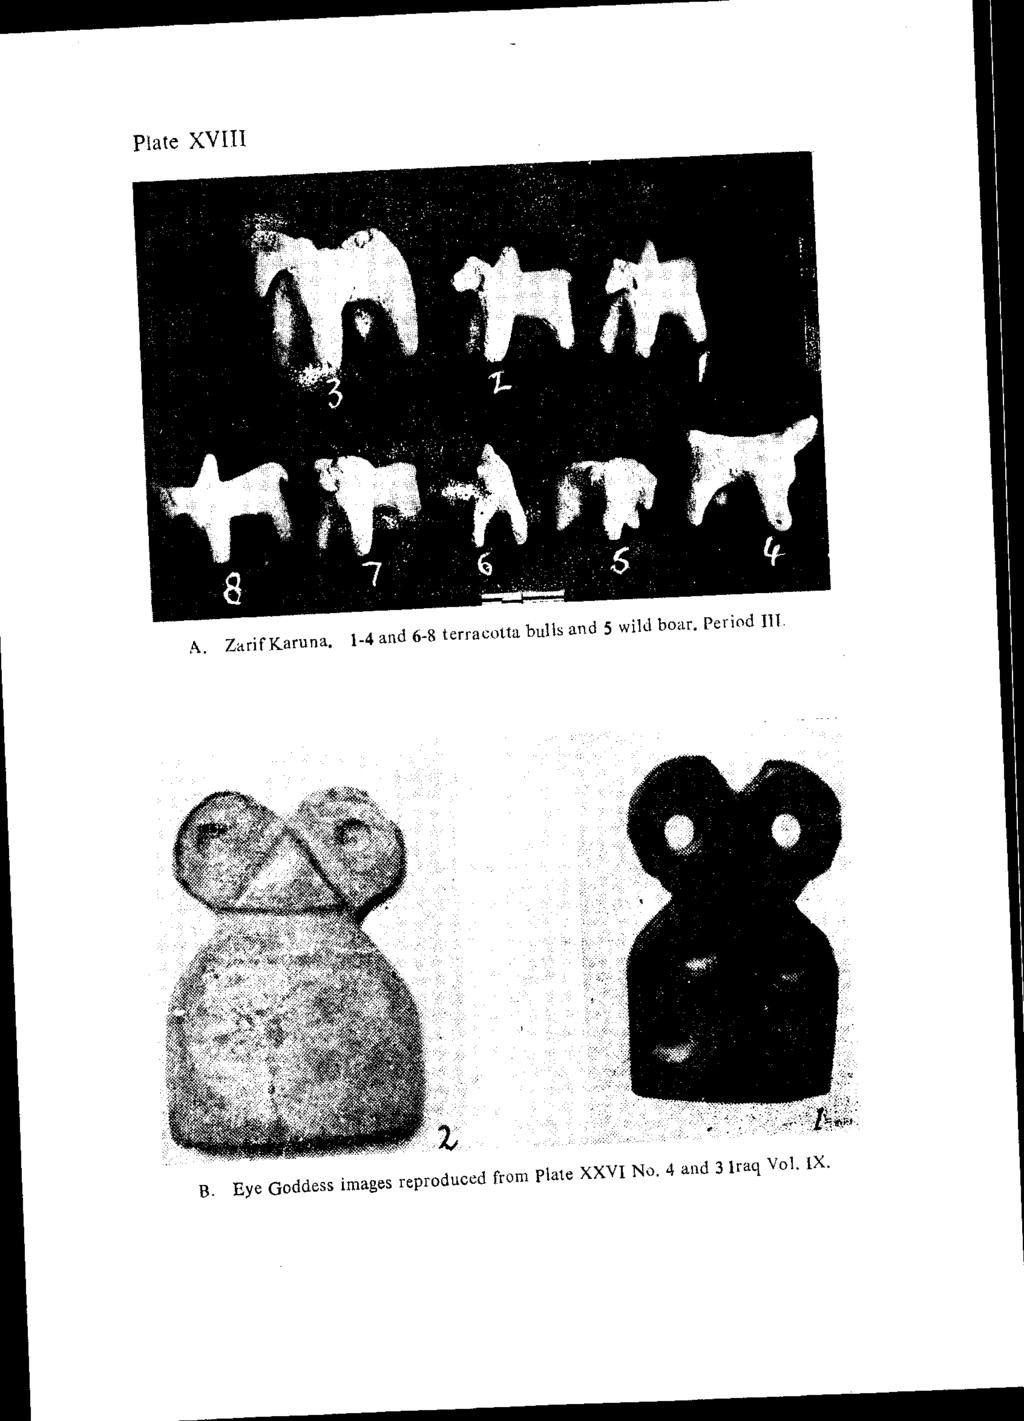 Plate XVIII A. ZarifKaruna. 1-4 and 6-8 lerracotta bulls and 5 wild boar.